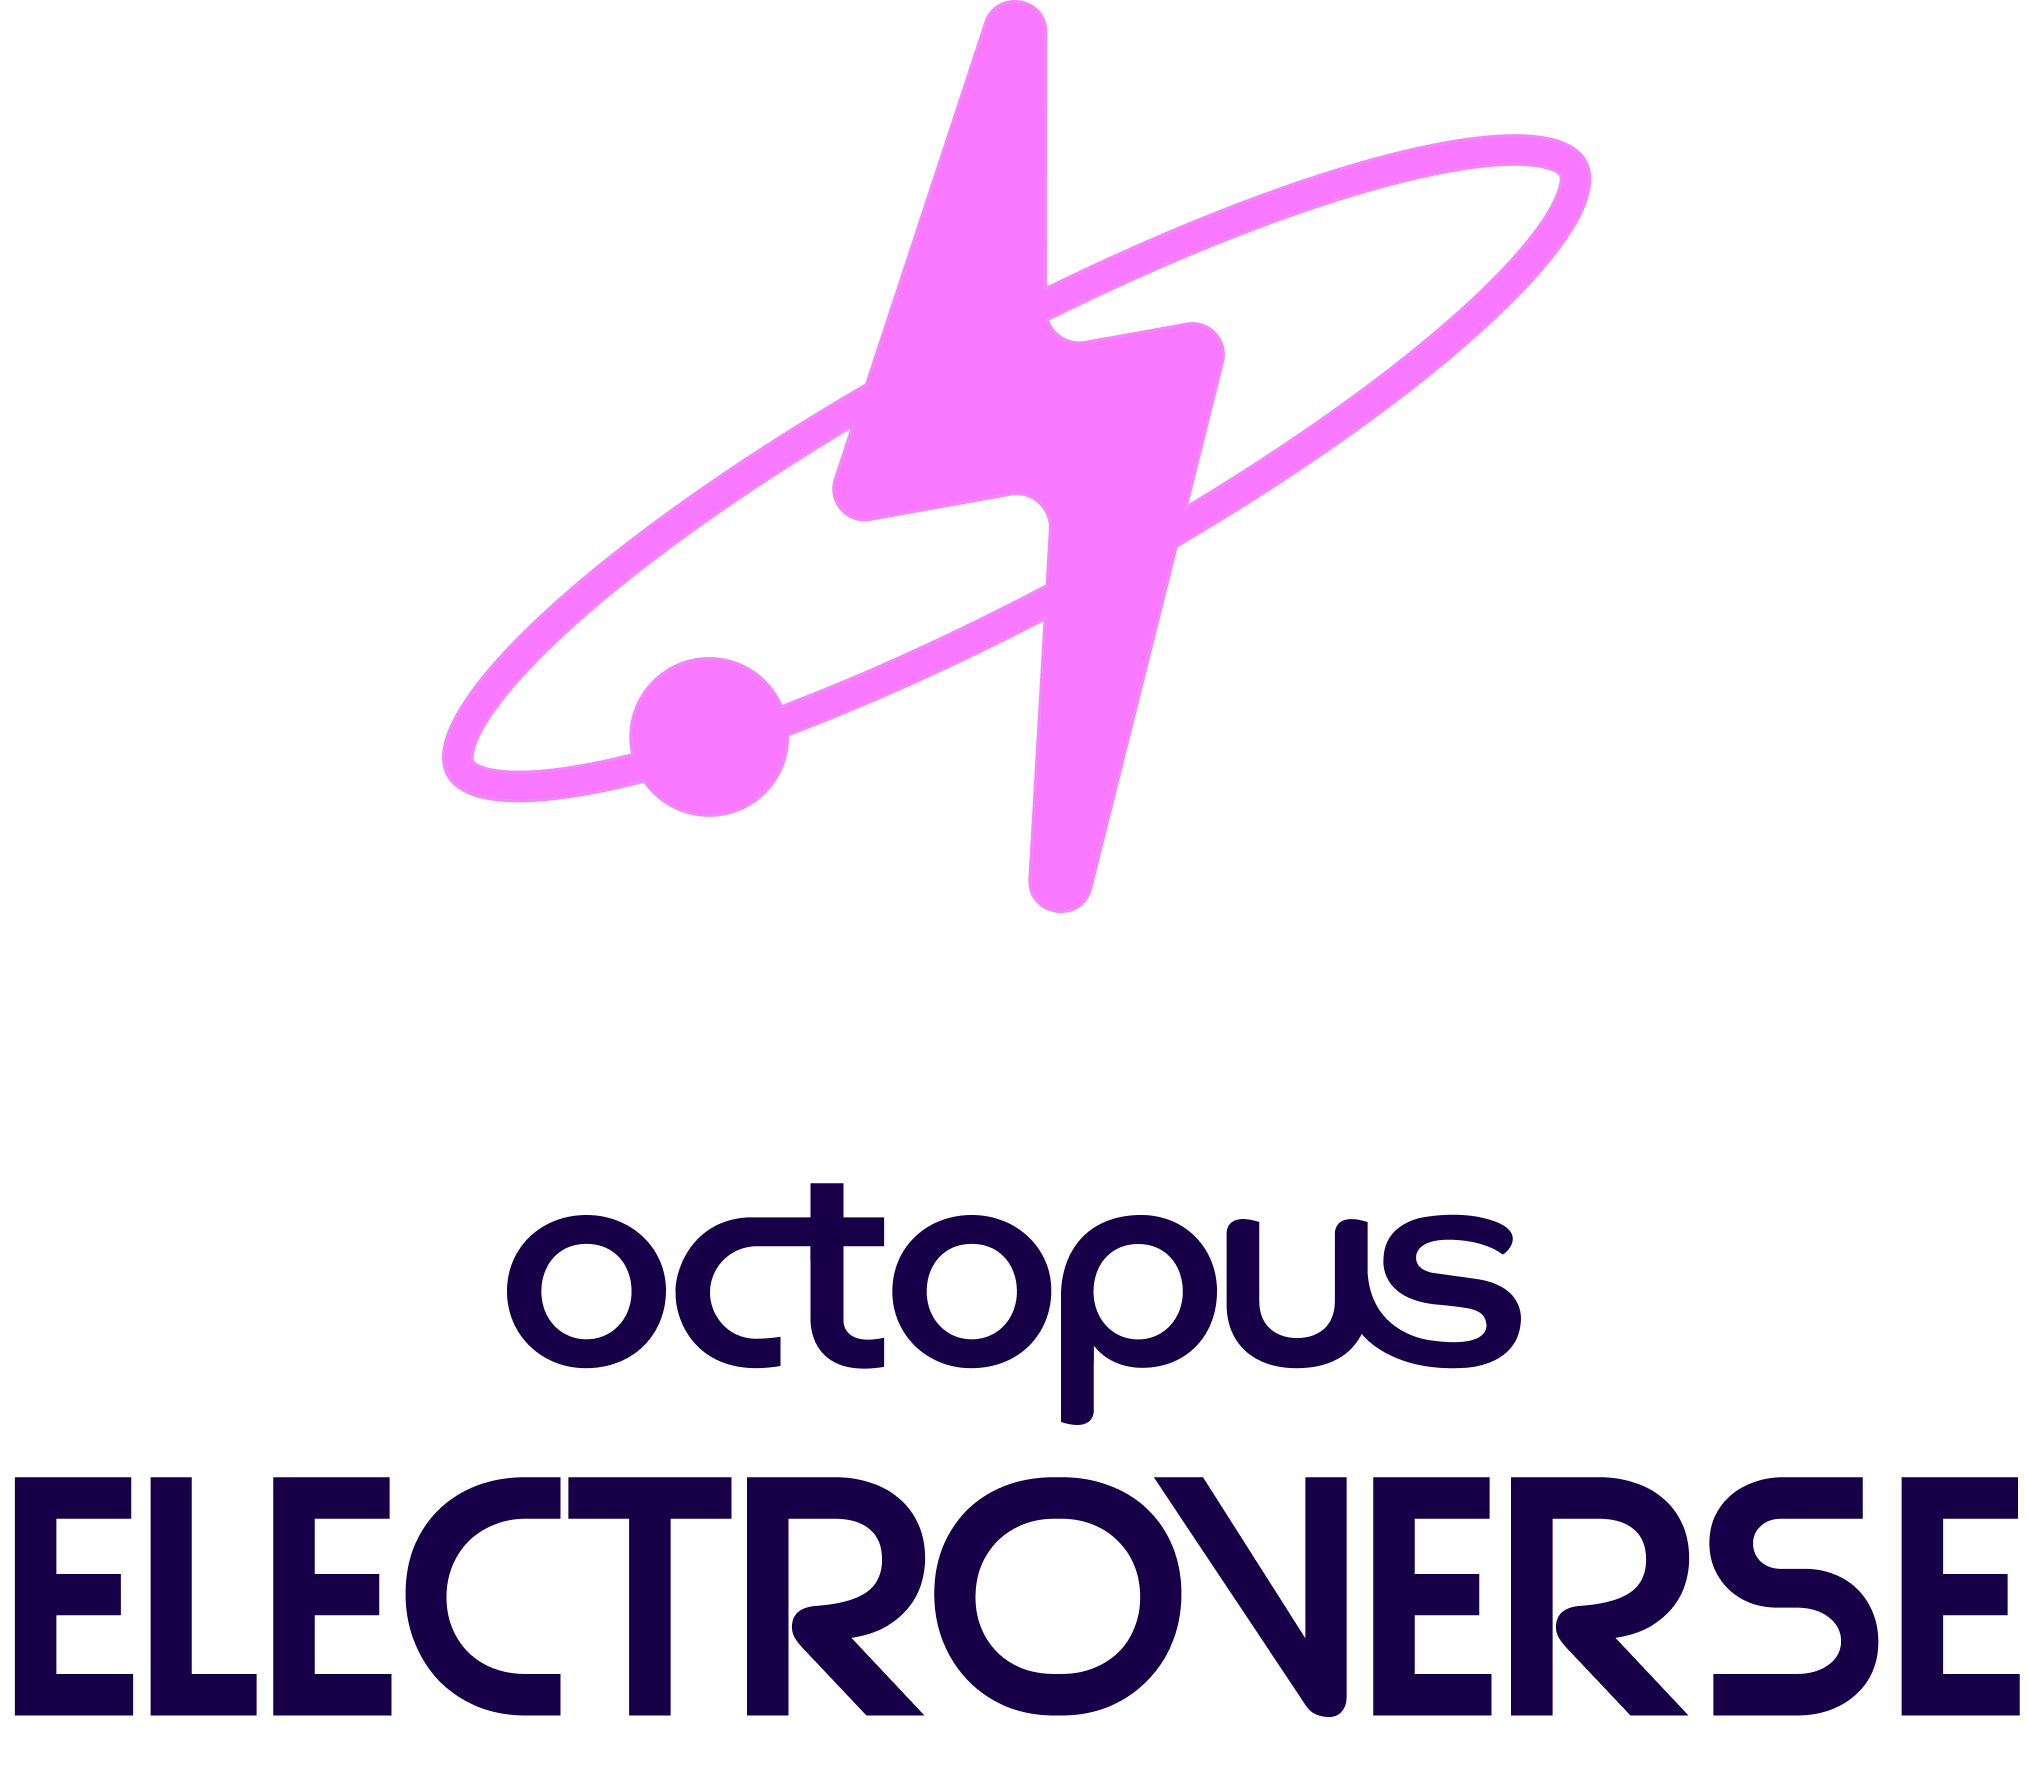 Octopus Electroverse